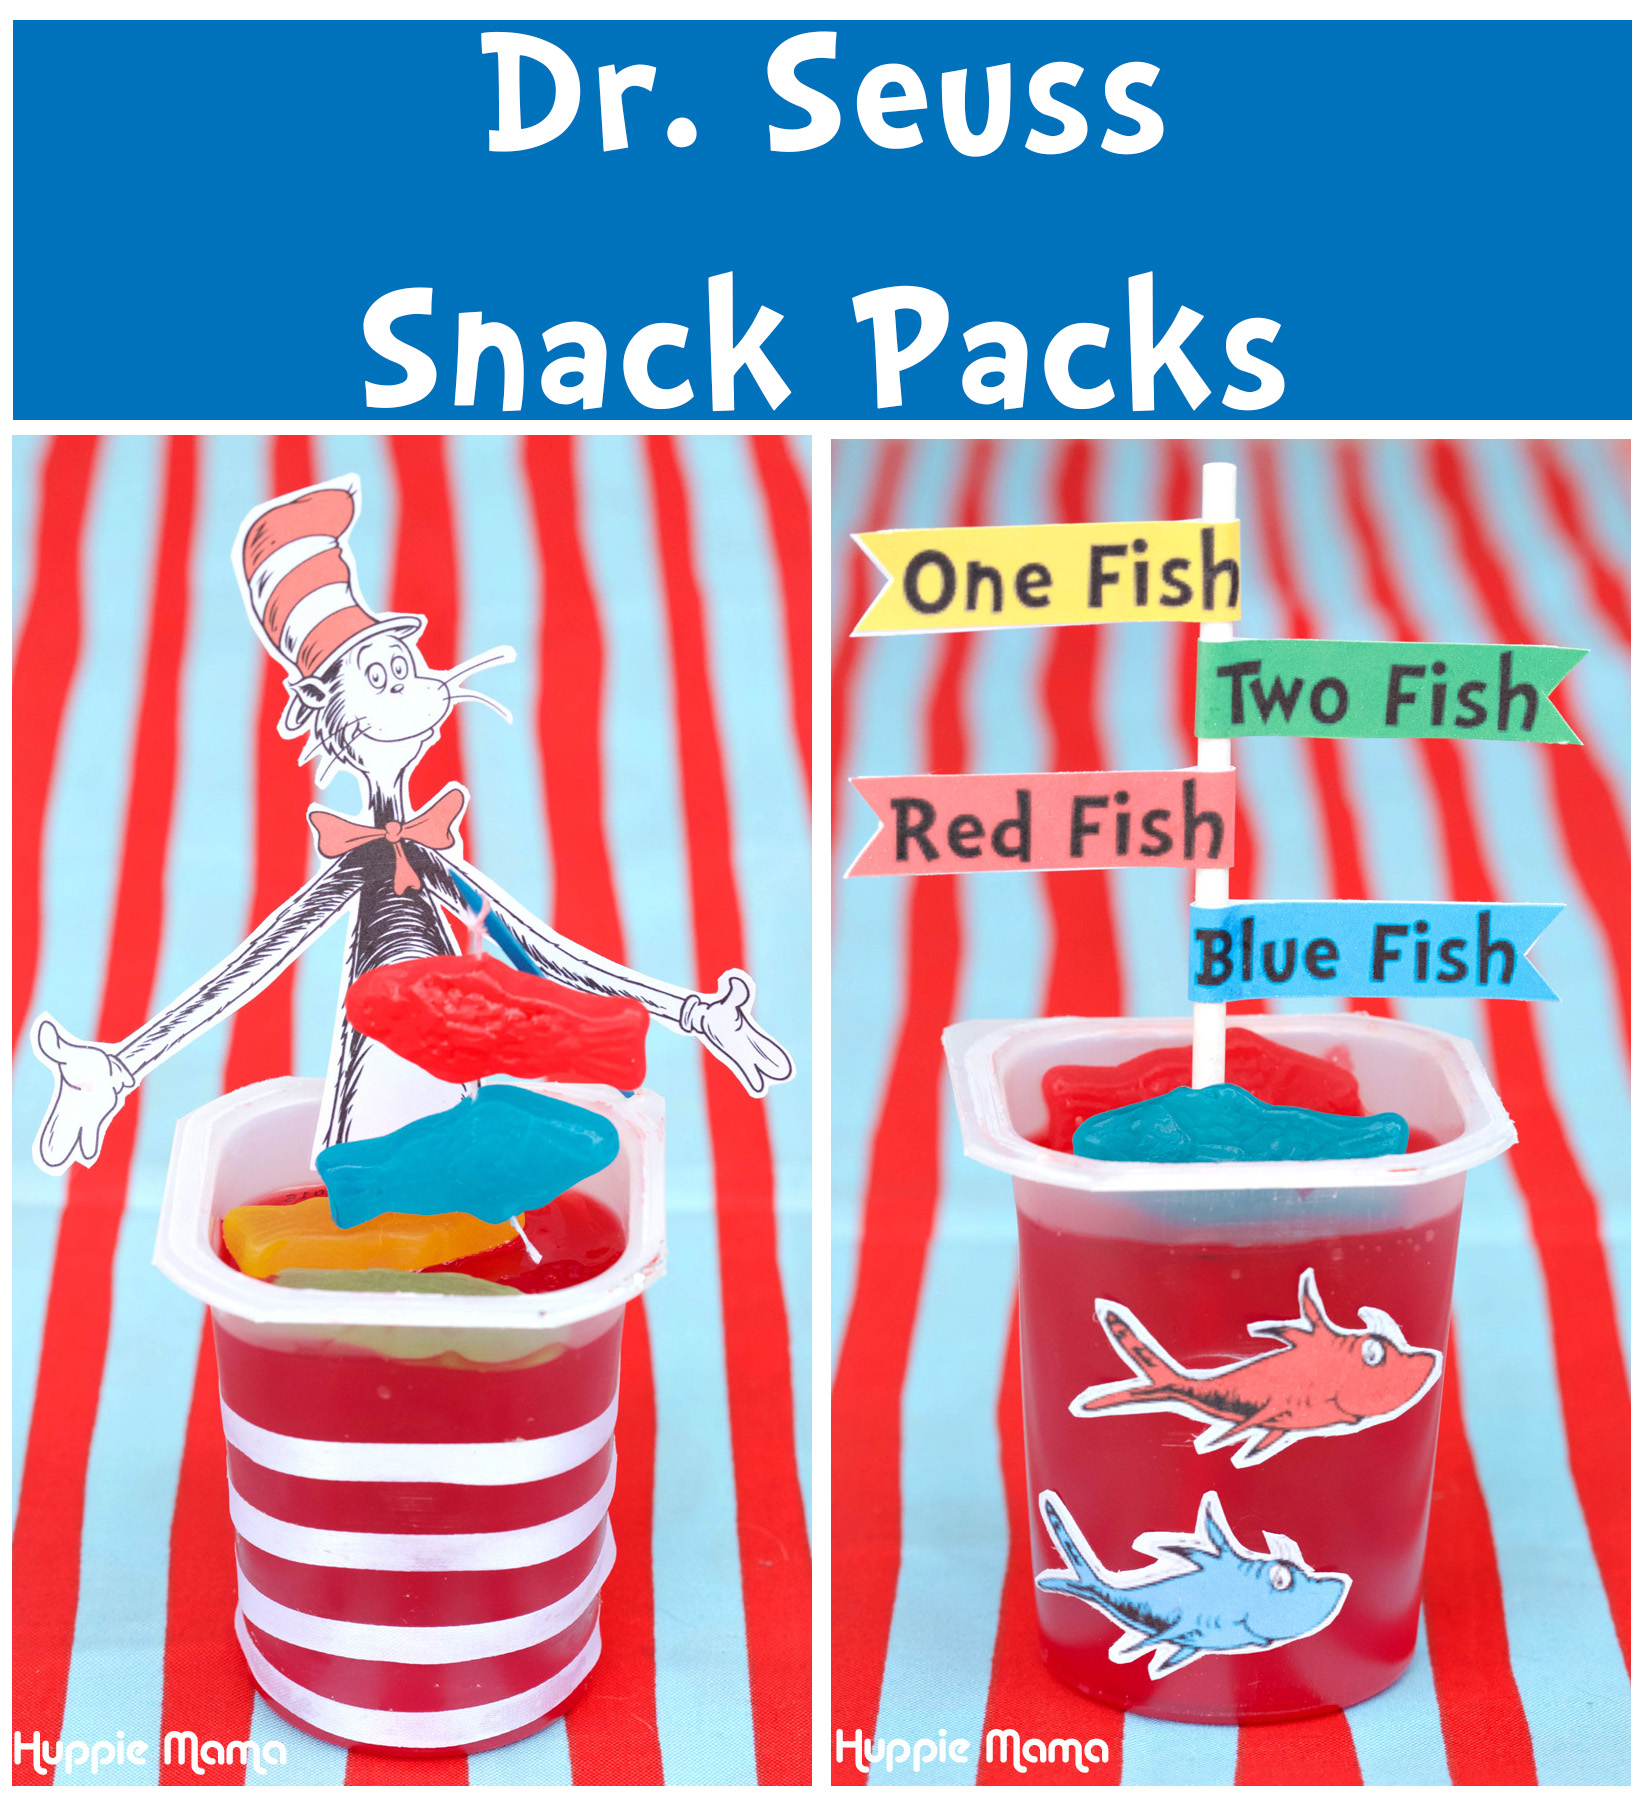 Dr. Seuss Snack Pack Ideas